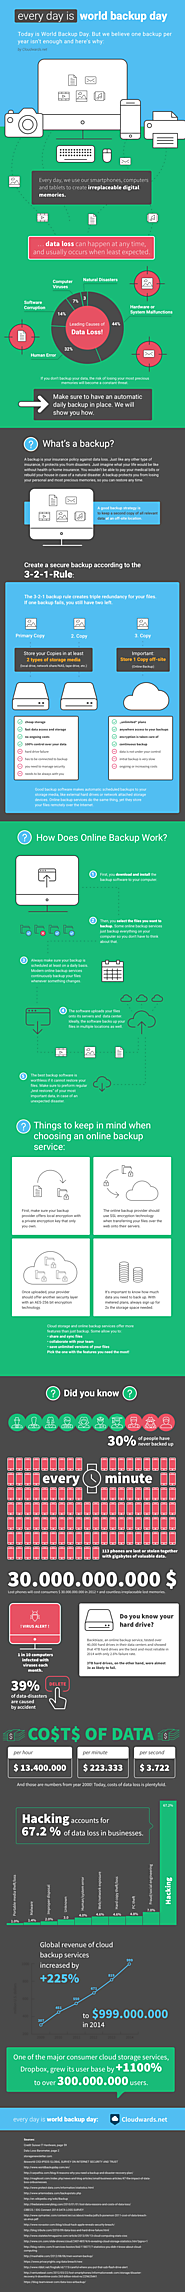 World Backup Day 2015 - Infographic - Cloudwards.net